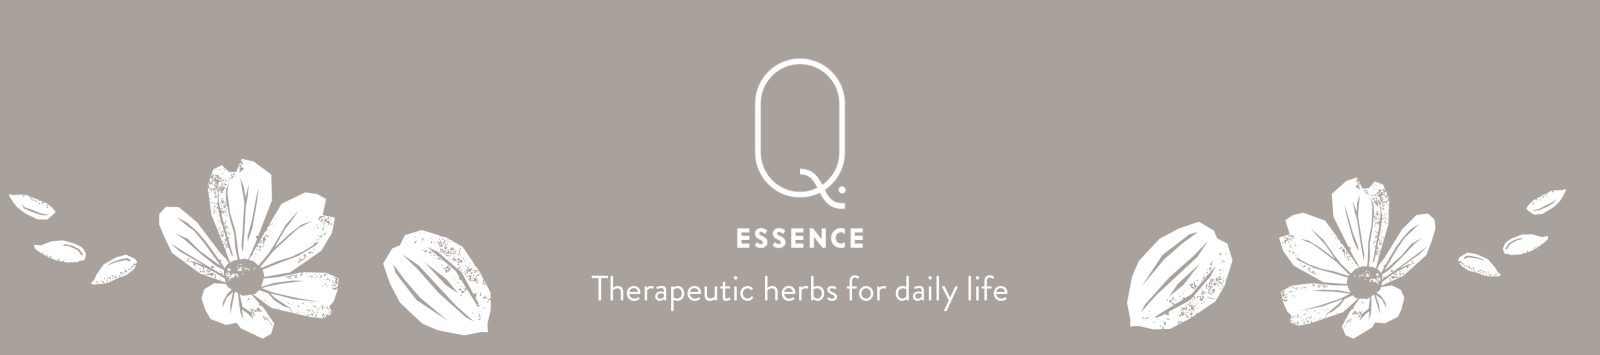 banner for q essence healing herbs